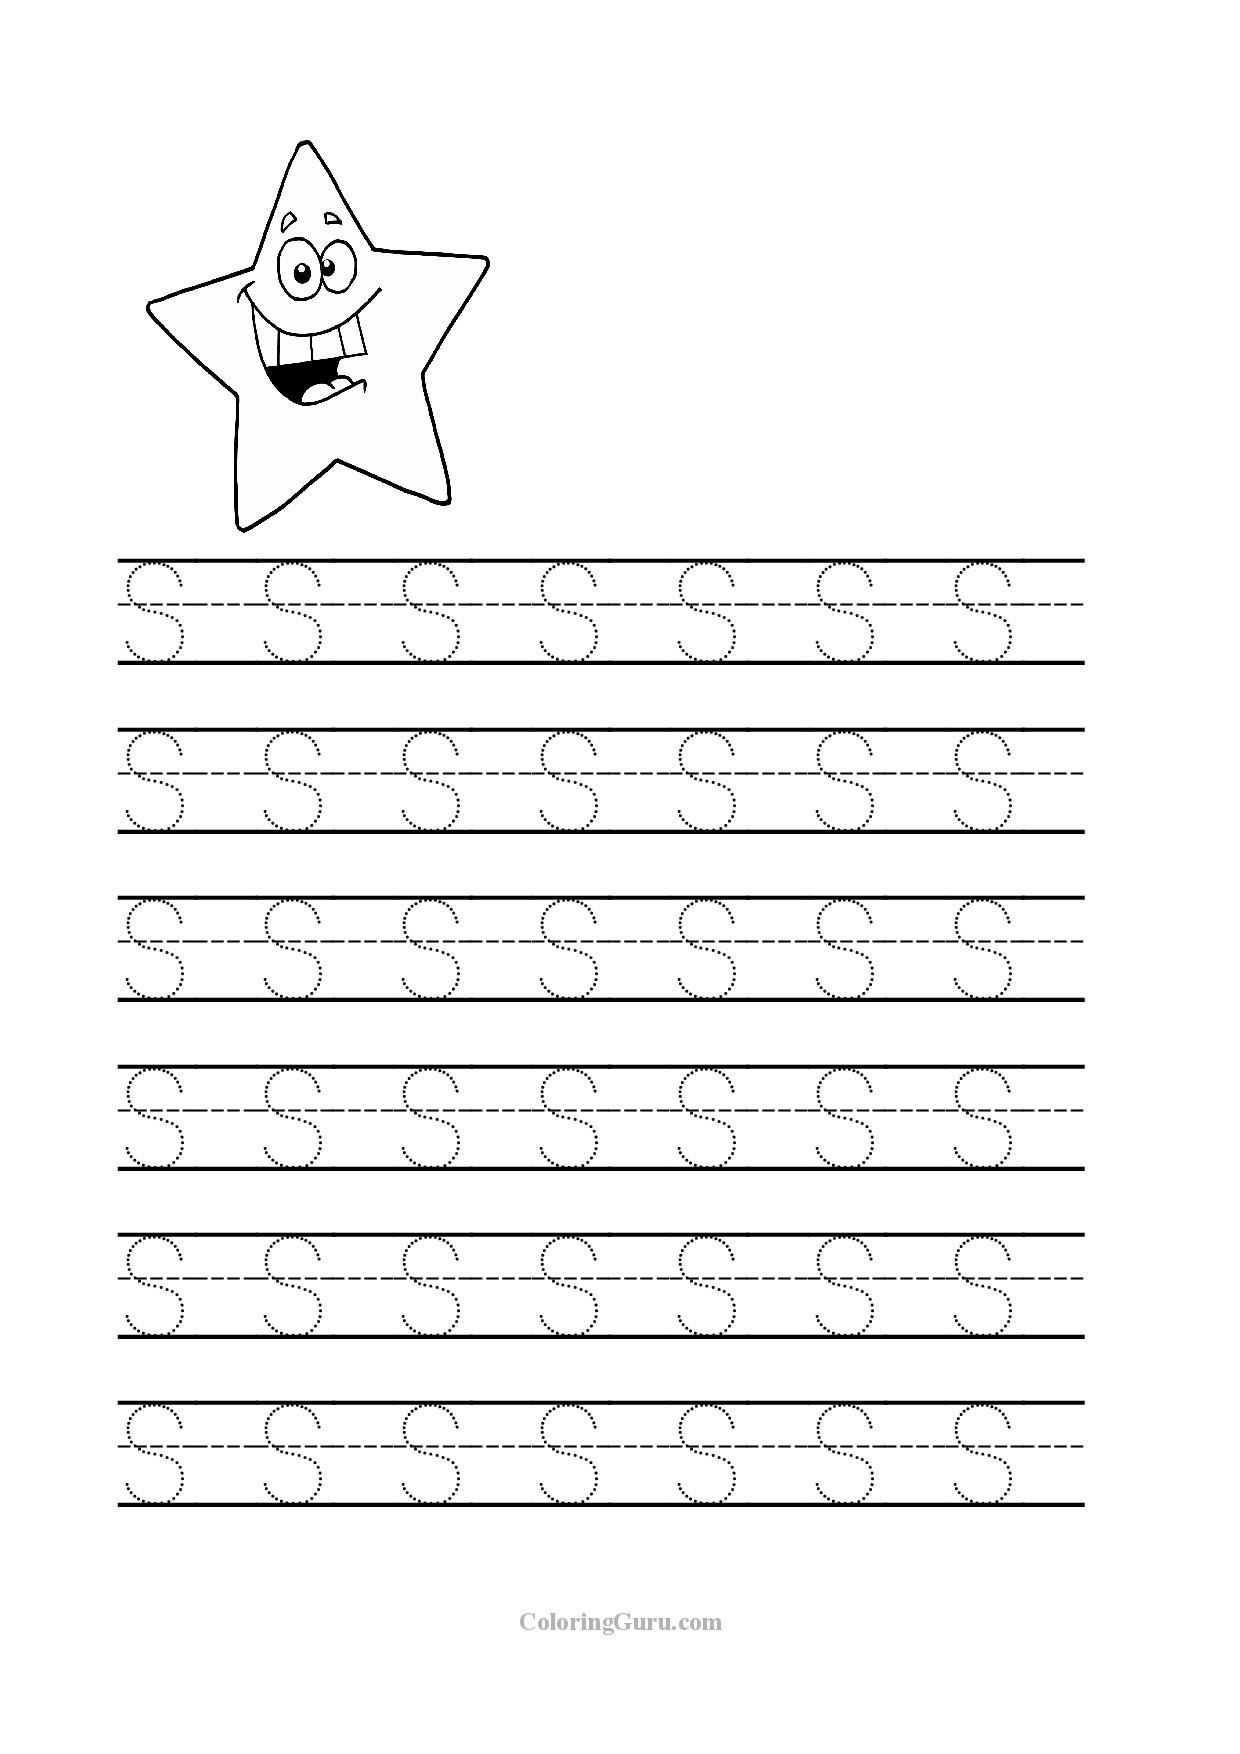 Alphabet Recognition Worksheets for Kindergarten Along with Preschool Number Learning Worksheets Best Free Printable Tracing